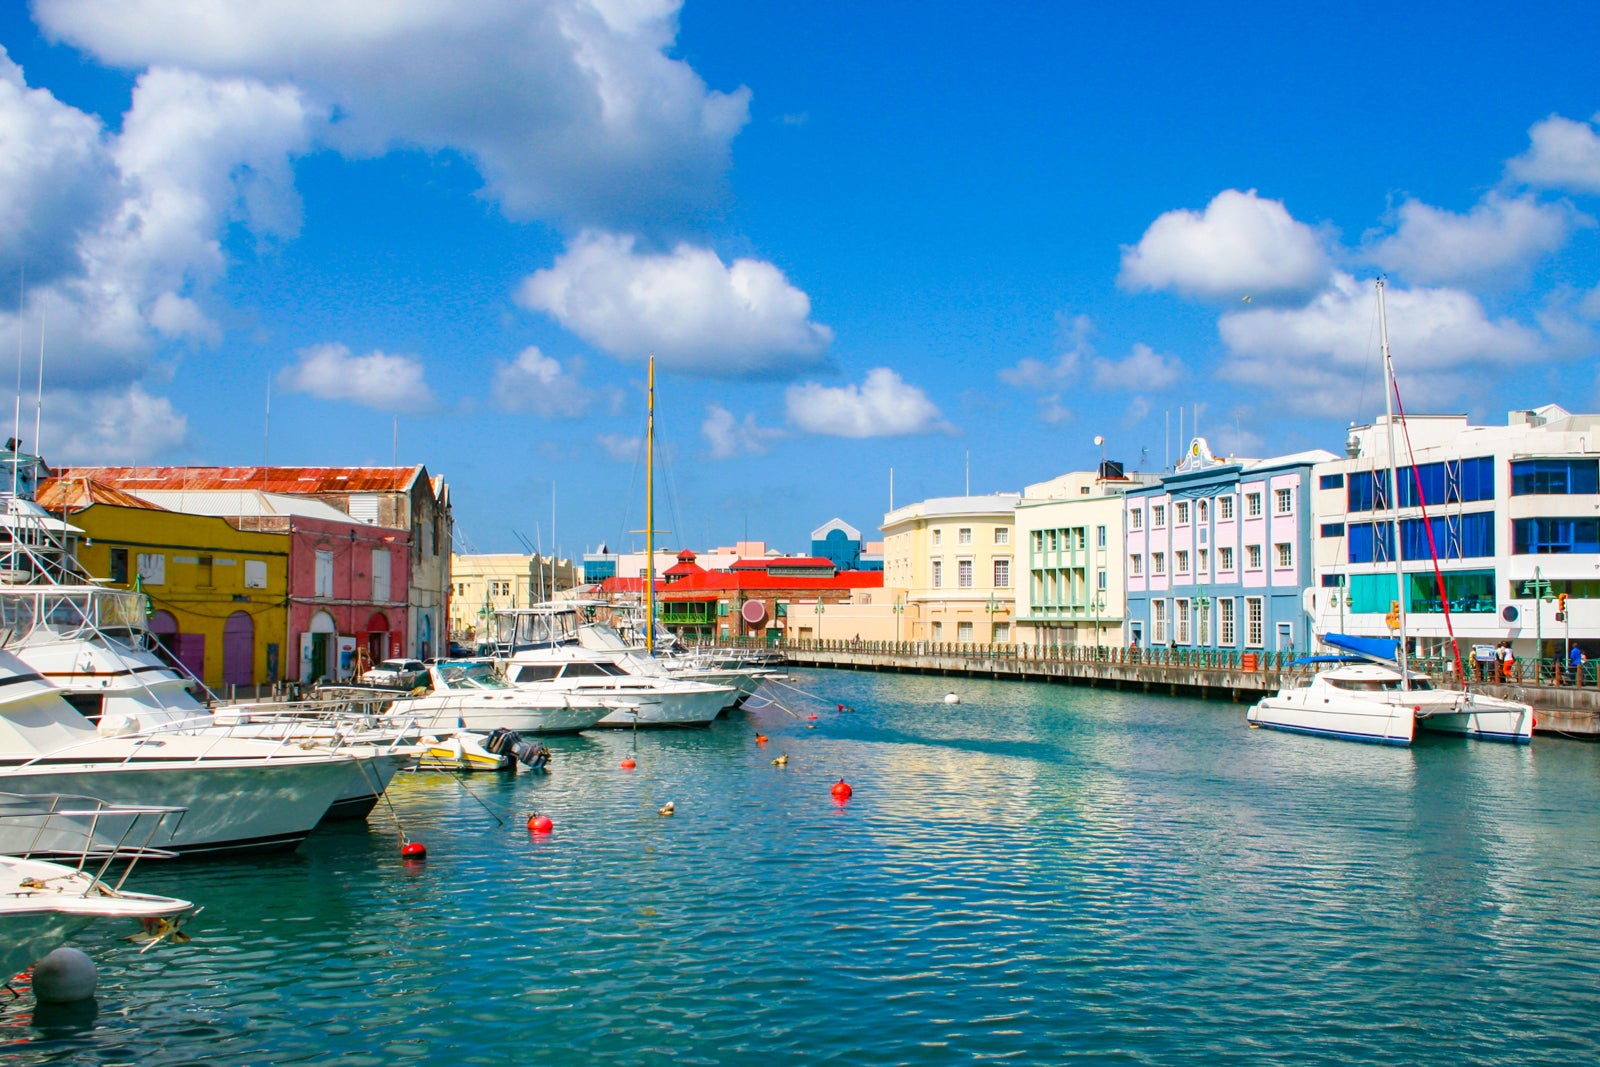 royal caribbean bahamas cruise packing list